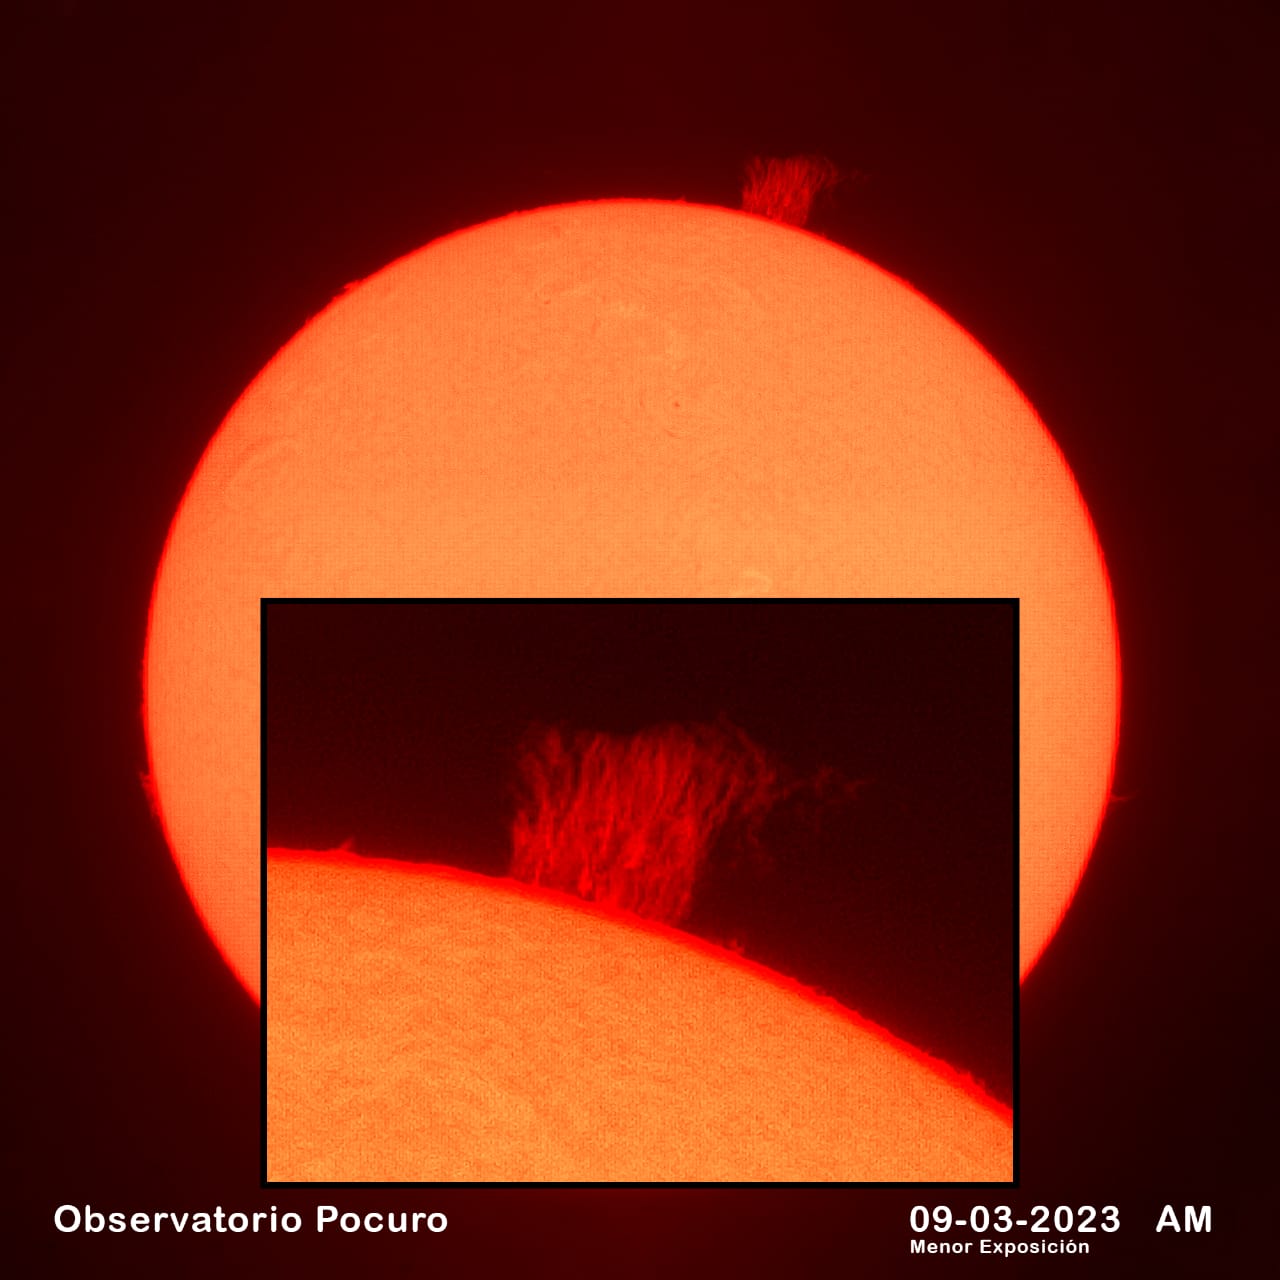 CALLE LARGA: Observatorio Pocuro capta impresionante erupción solar de más de 50.000 kilómetros